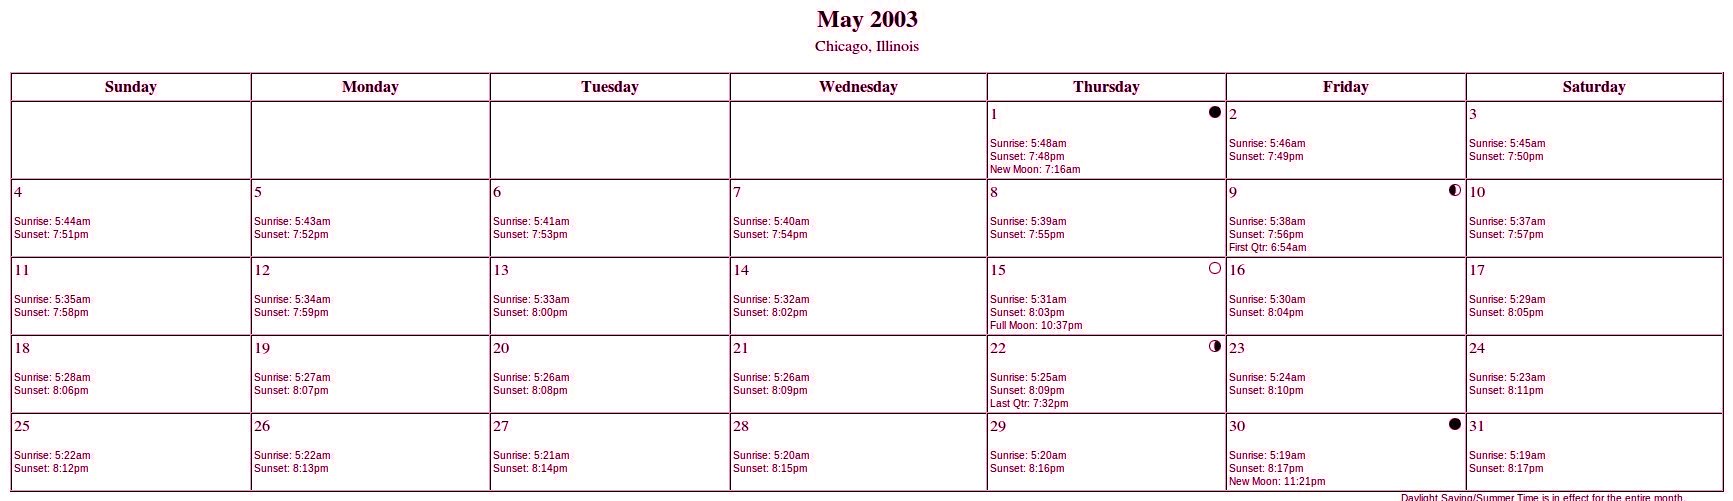 Calendar May 2003.jpg